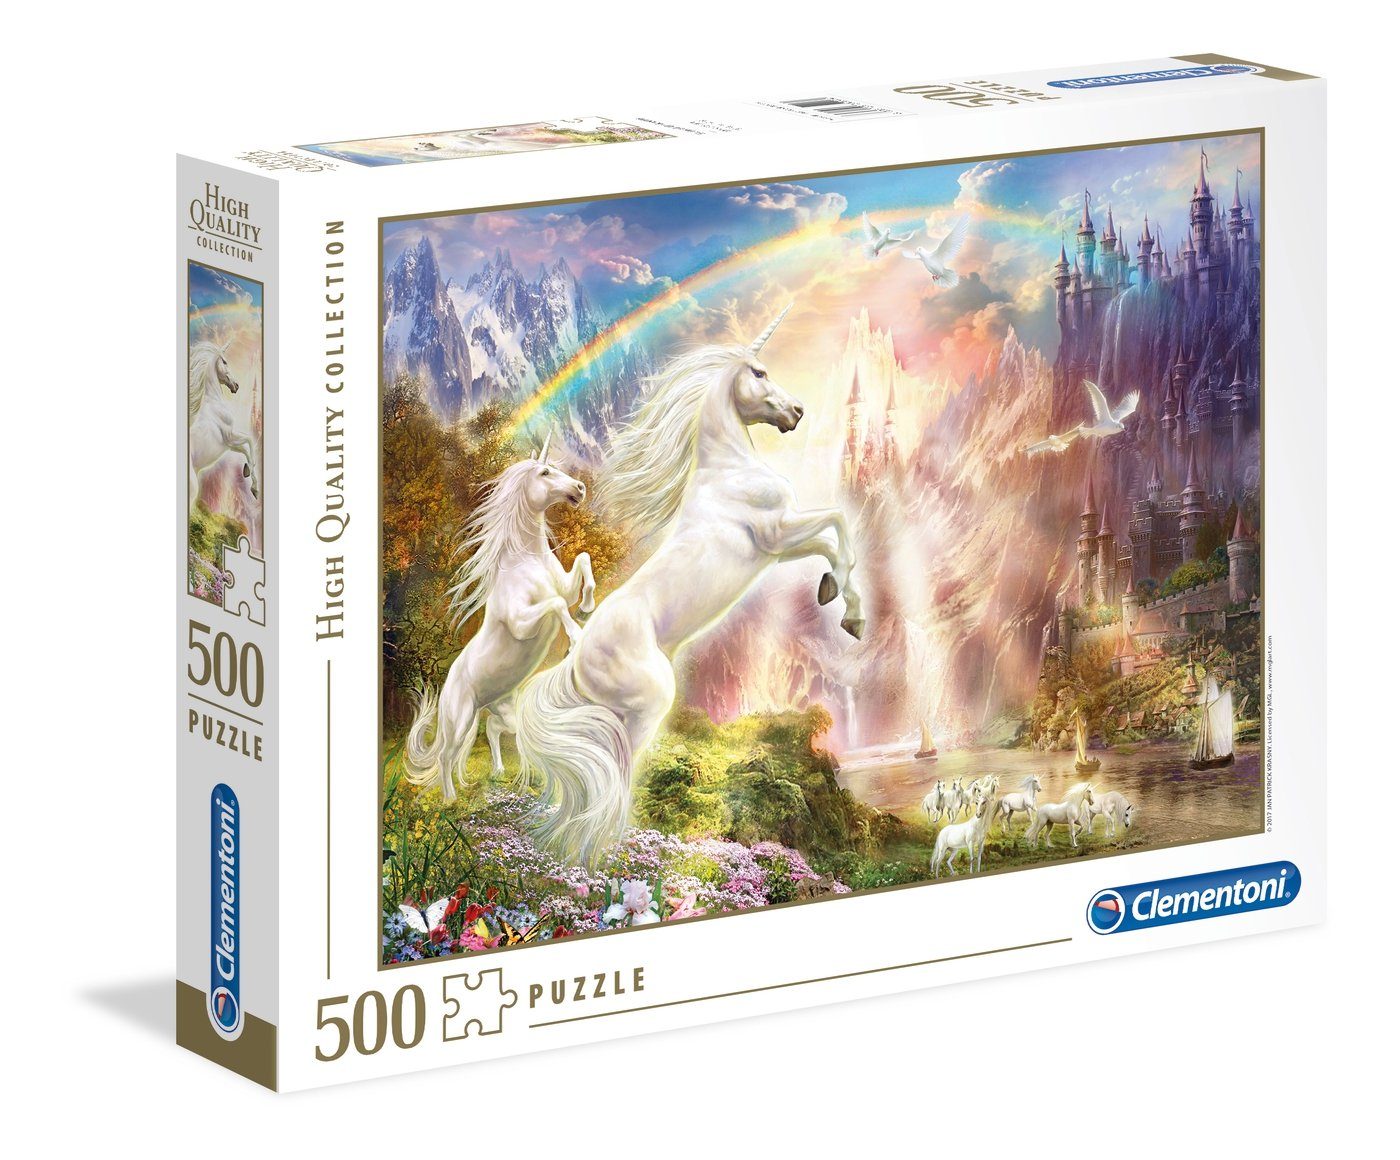 35054 Puzzle Clementoni® Puzzleteile Sunset 500 Puzzle, 500 Unicorns Teile Clementoni